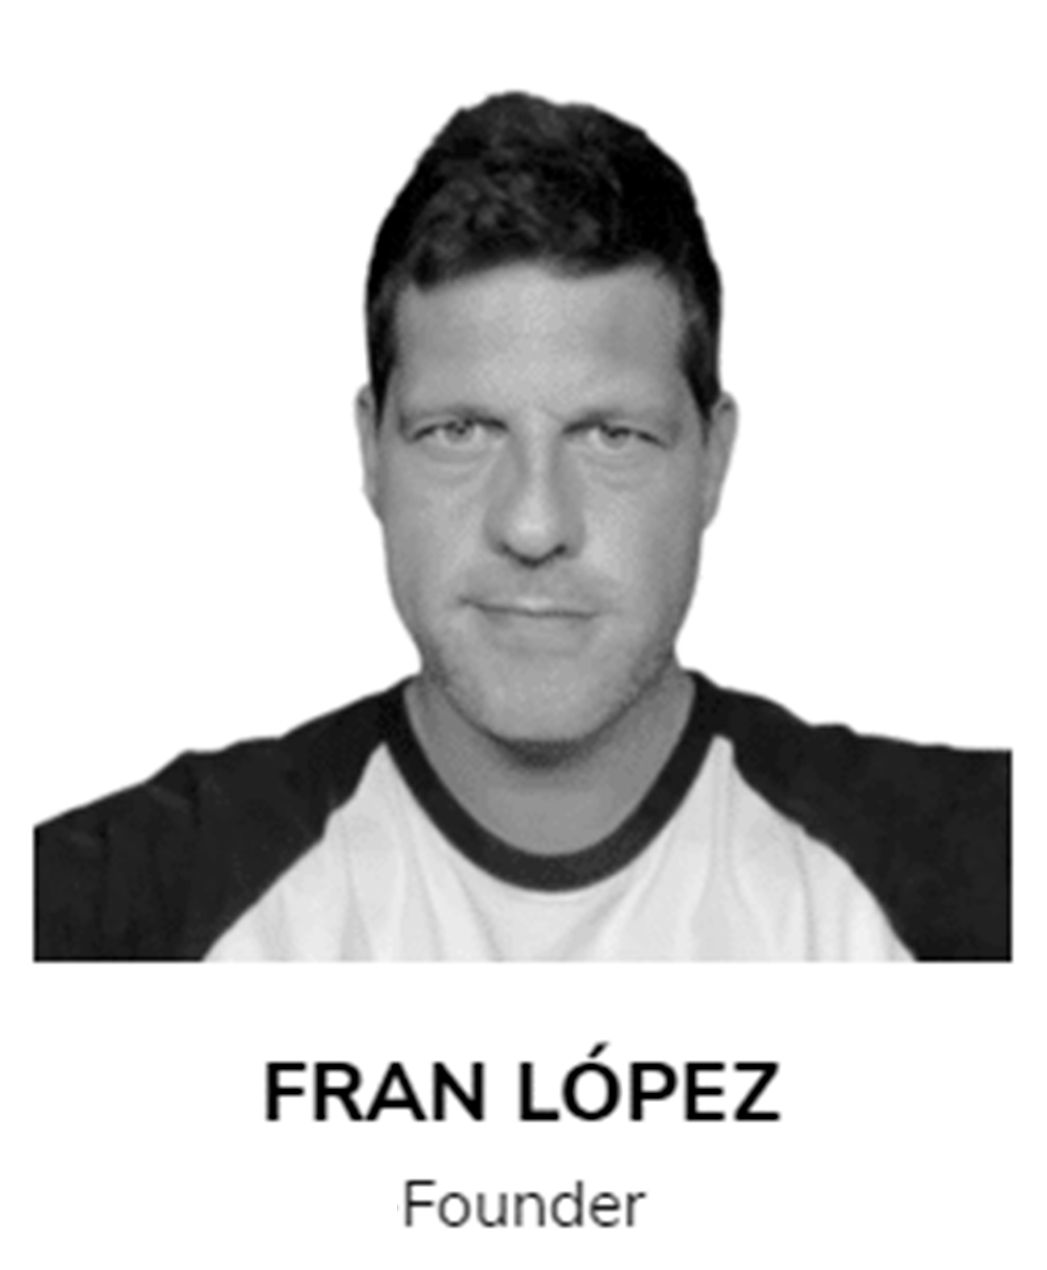 Fran Lopez Founder Clientify